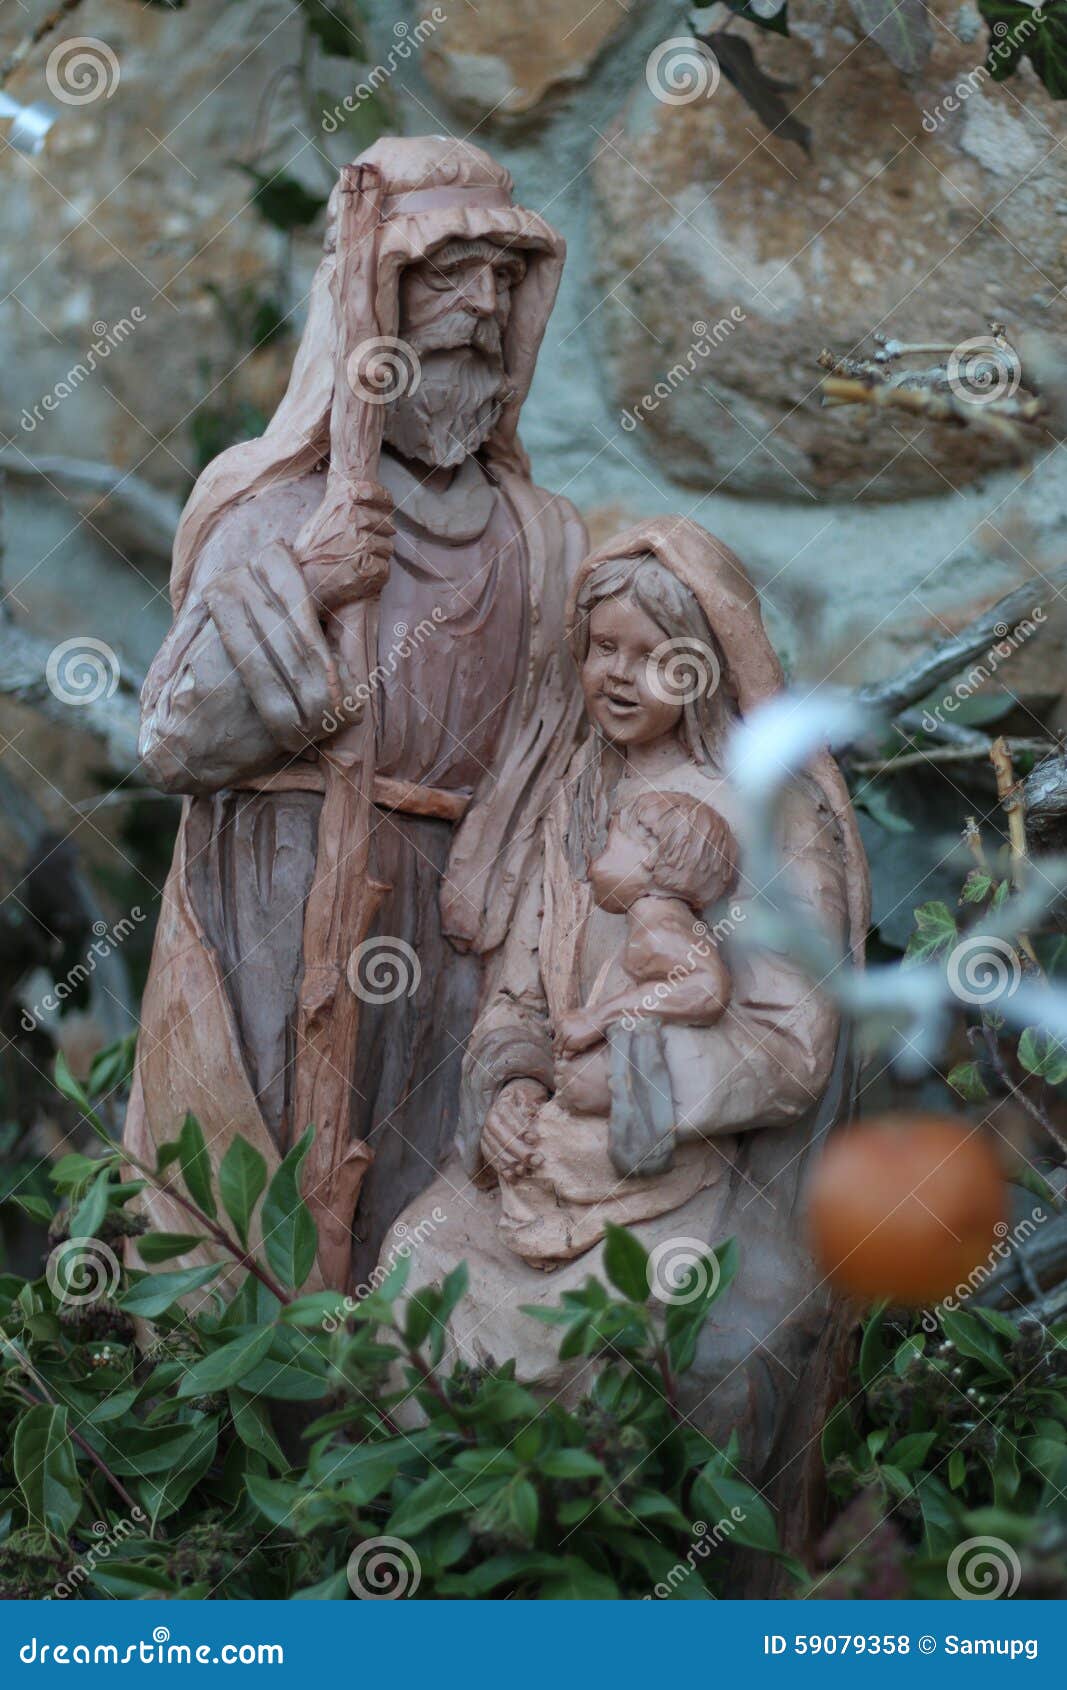 joseph mary and jesus wood statue